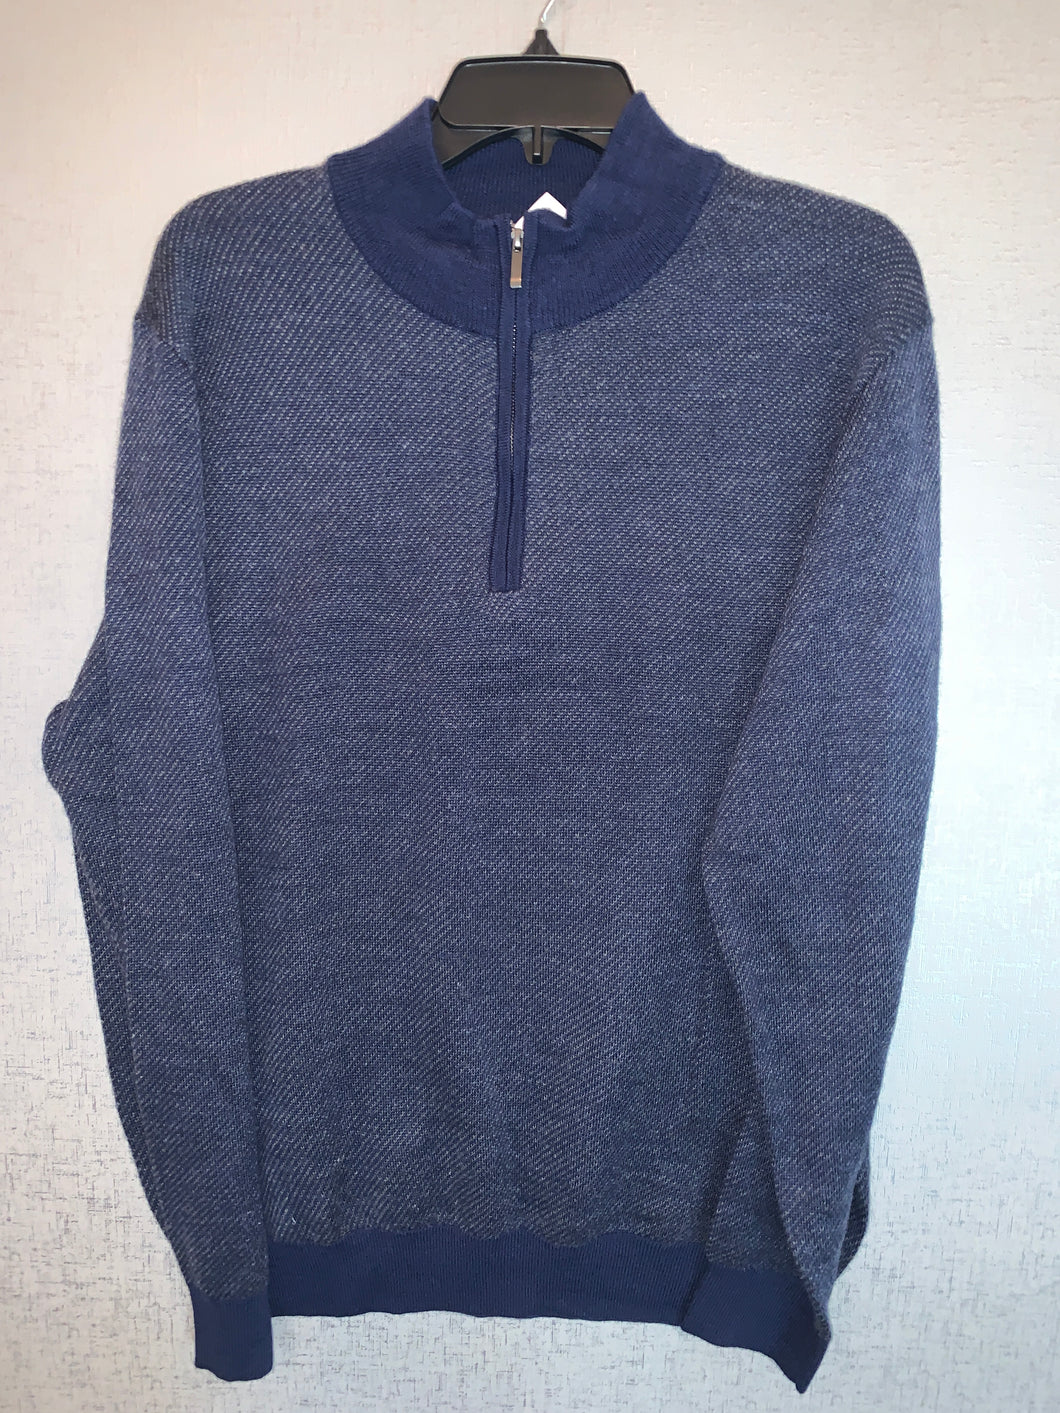 New - Men's Toscano Mock Neck Quarter Zip Diagonal Sweater - Blue - Large